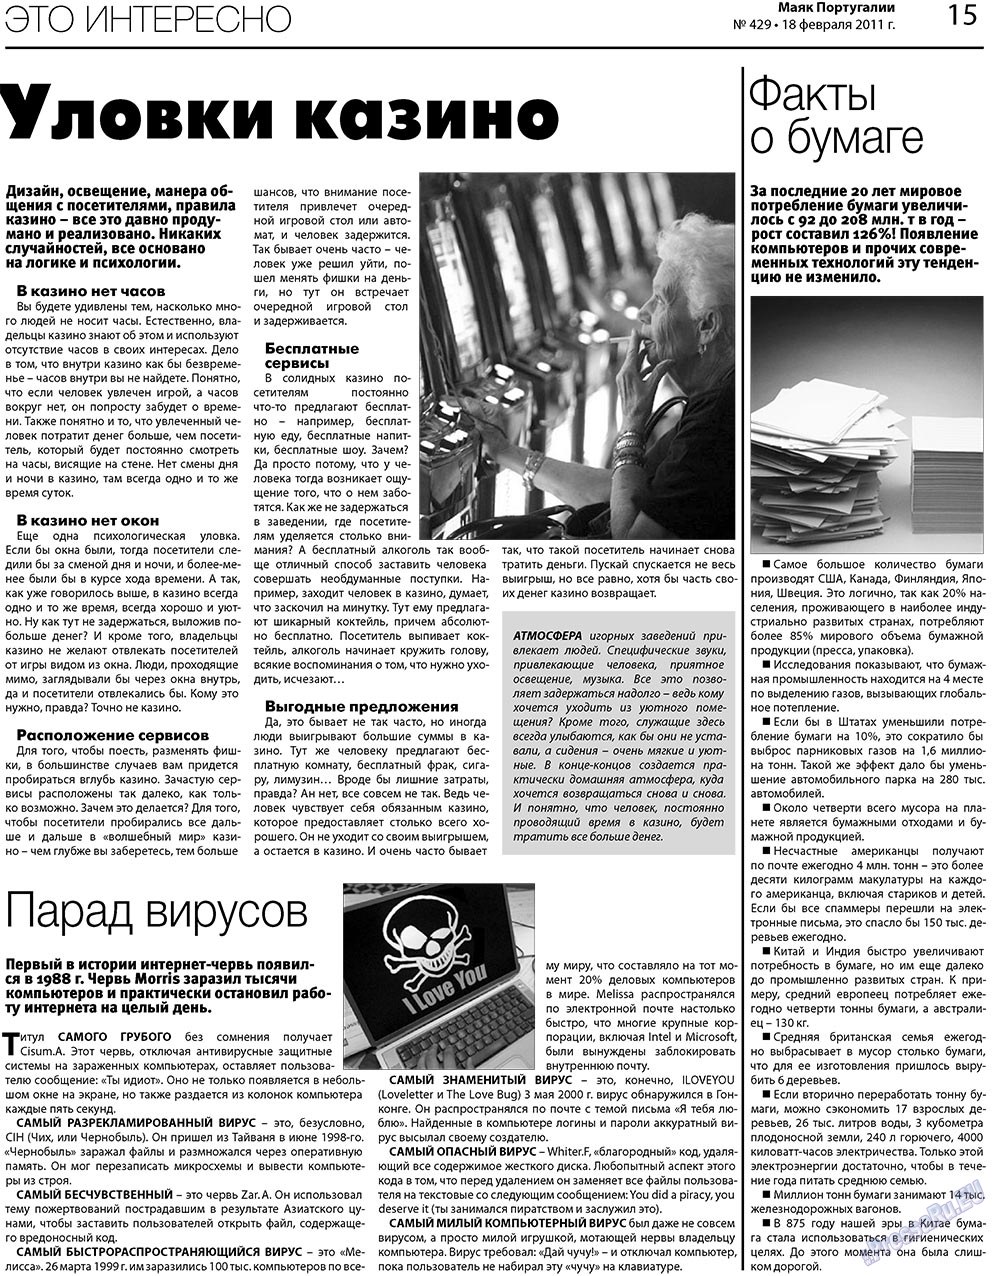 Маяк Португалии, газета. 2011 №429 стр.15